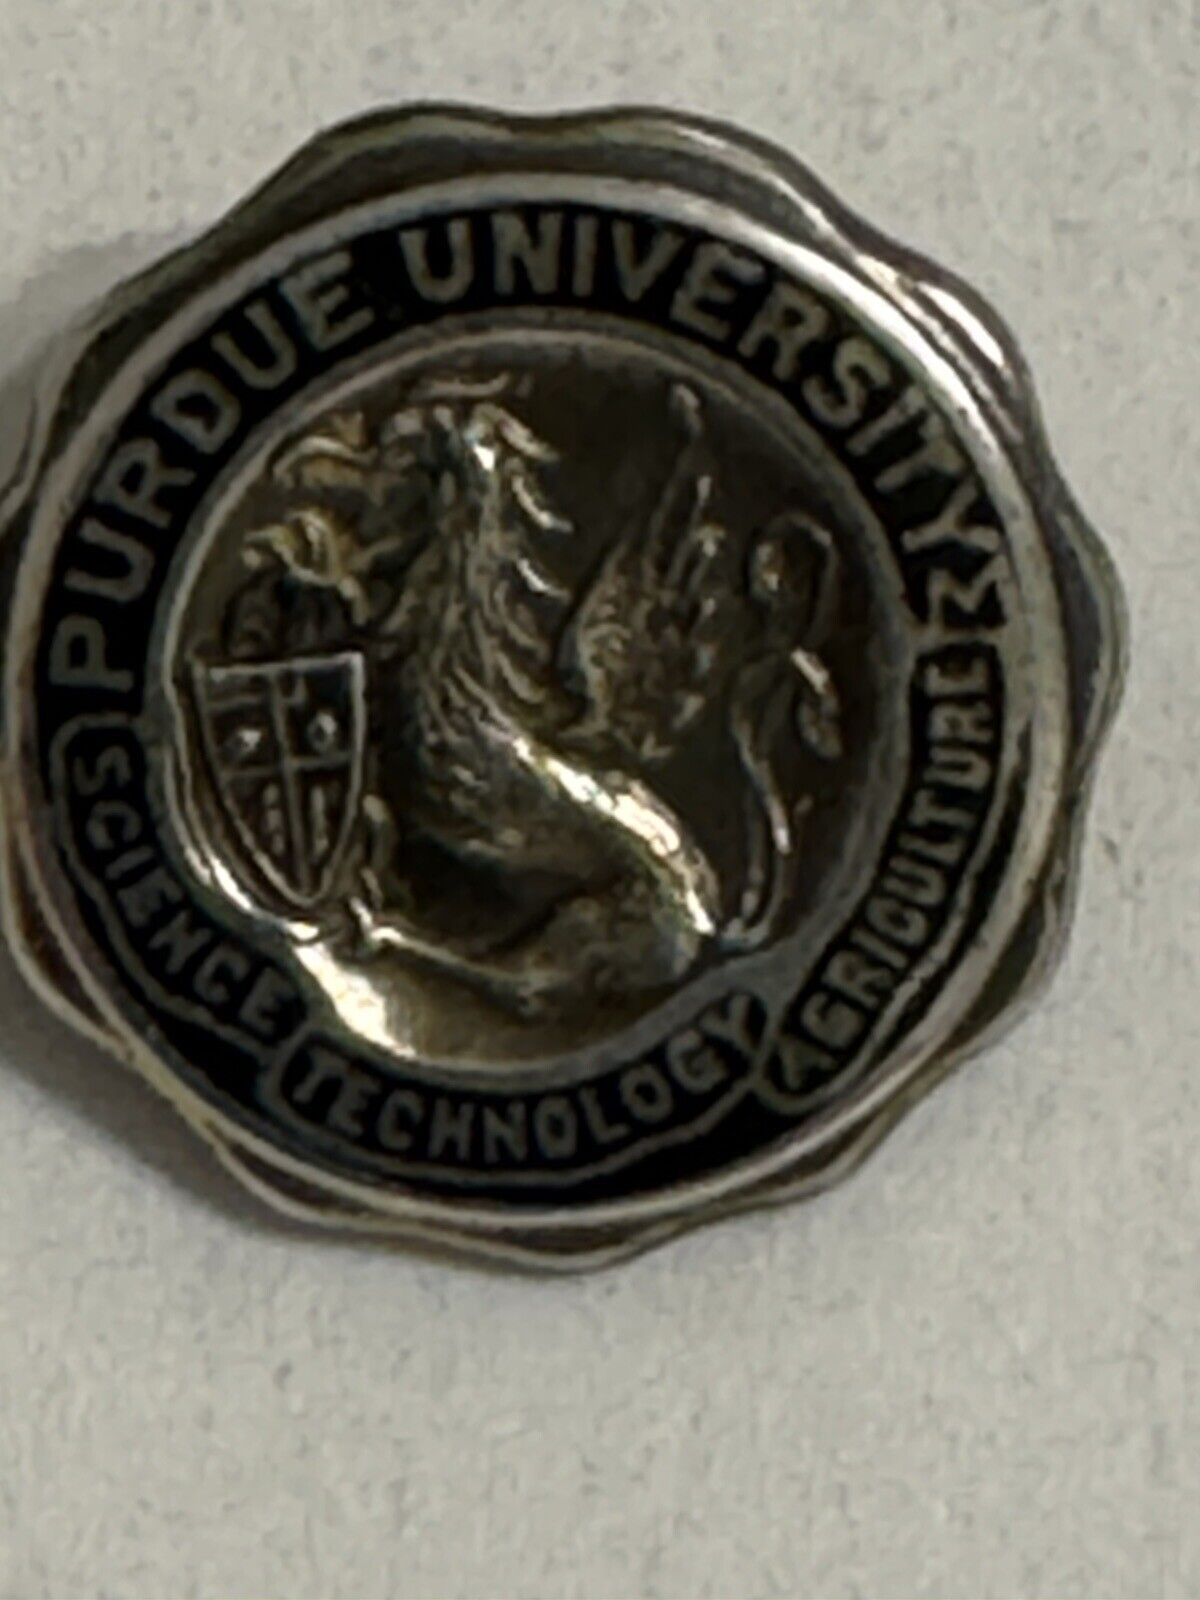 Purdue University Vintage Sterling Lapel Pin  Super Cool  Check Out Photos